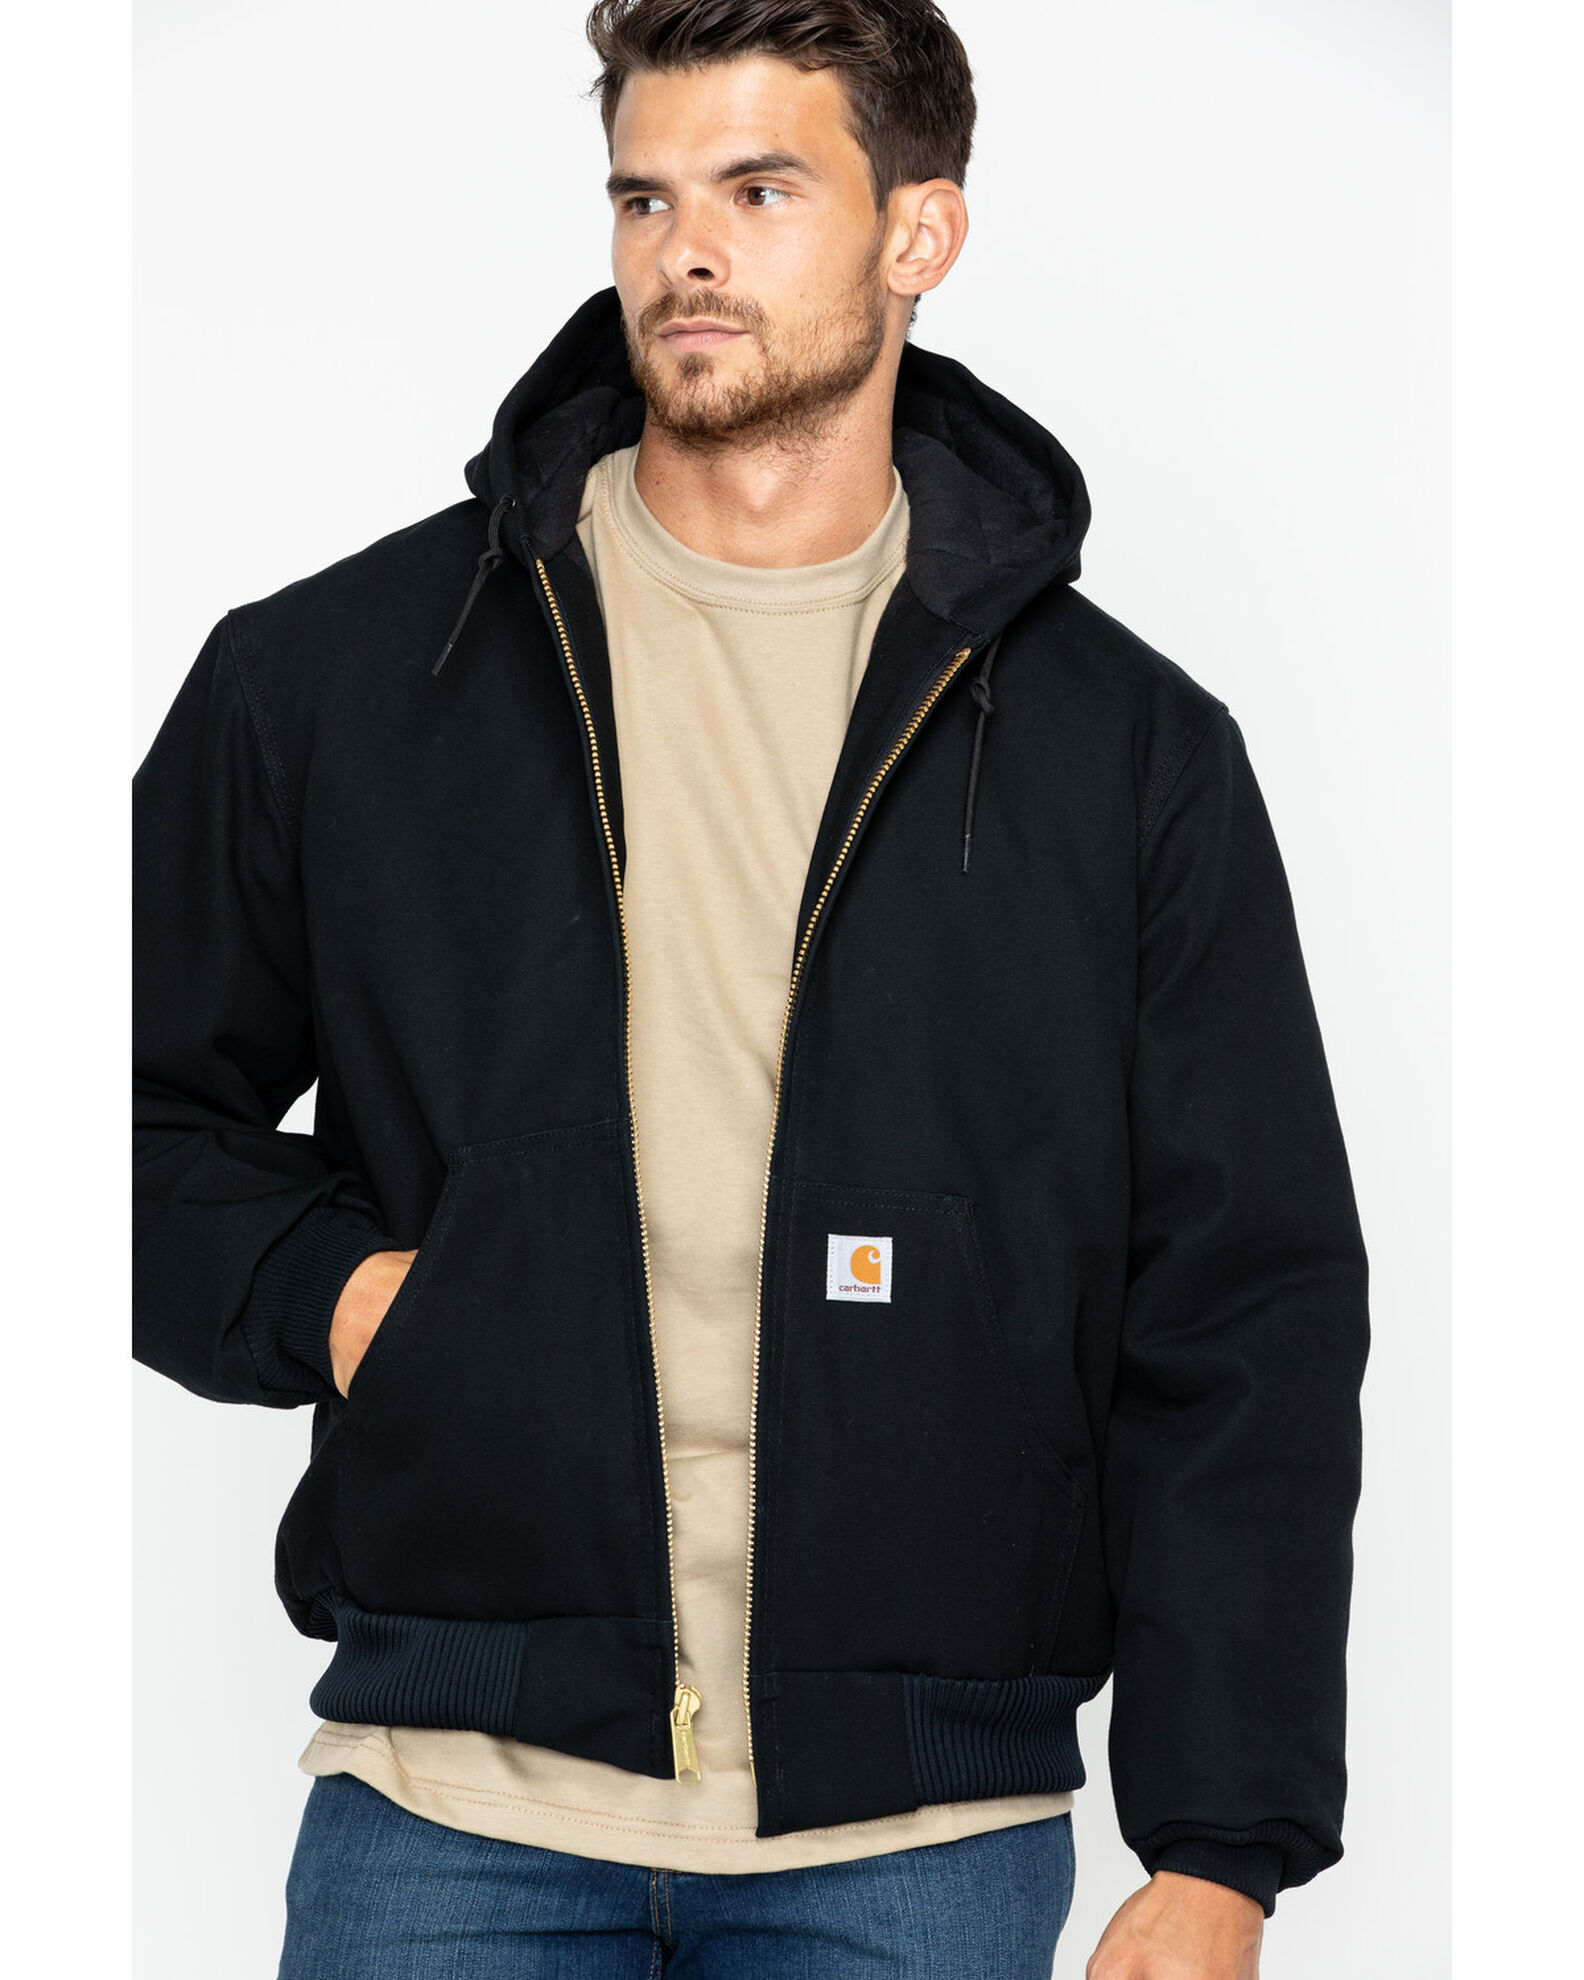 Carhartt Men's Gravel Duck Hooded Insulated Work Jacket (Large) in